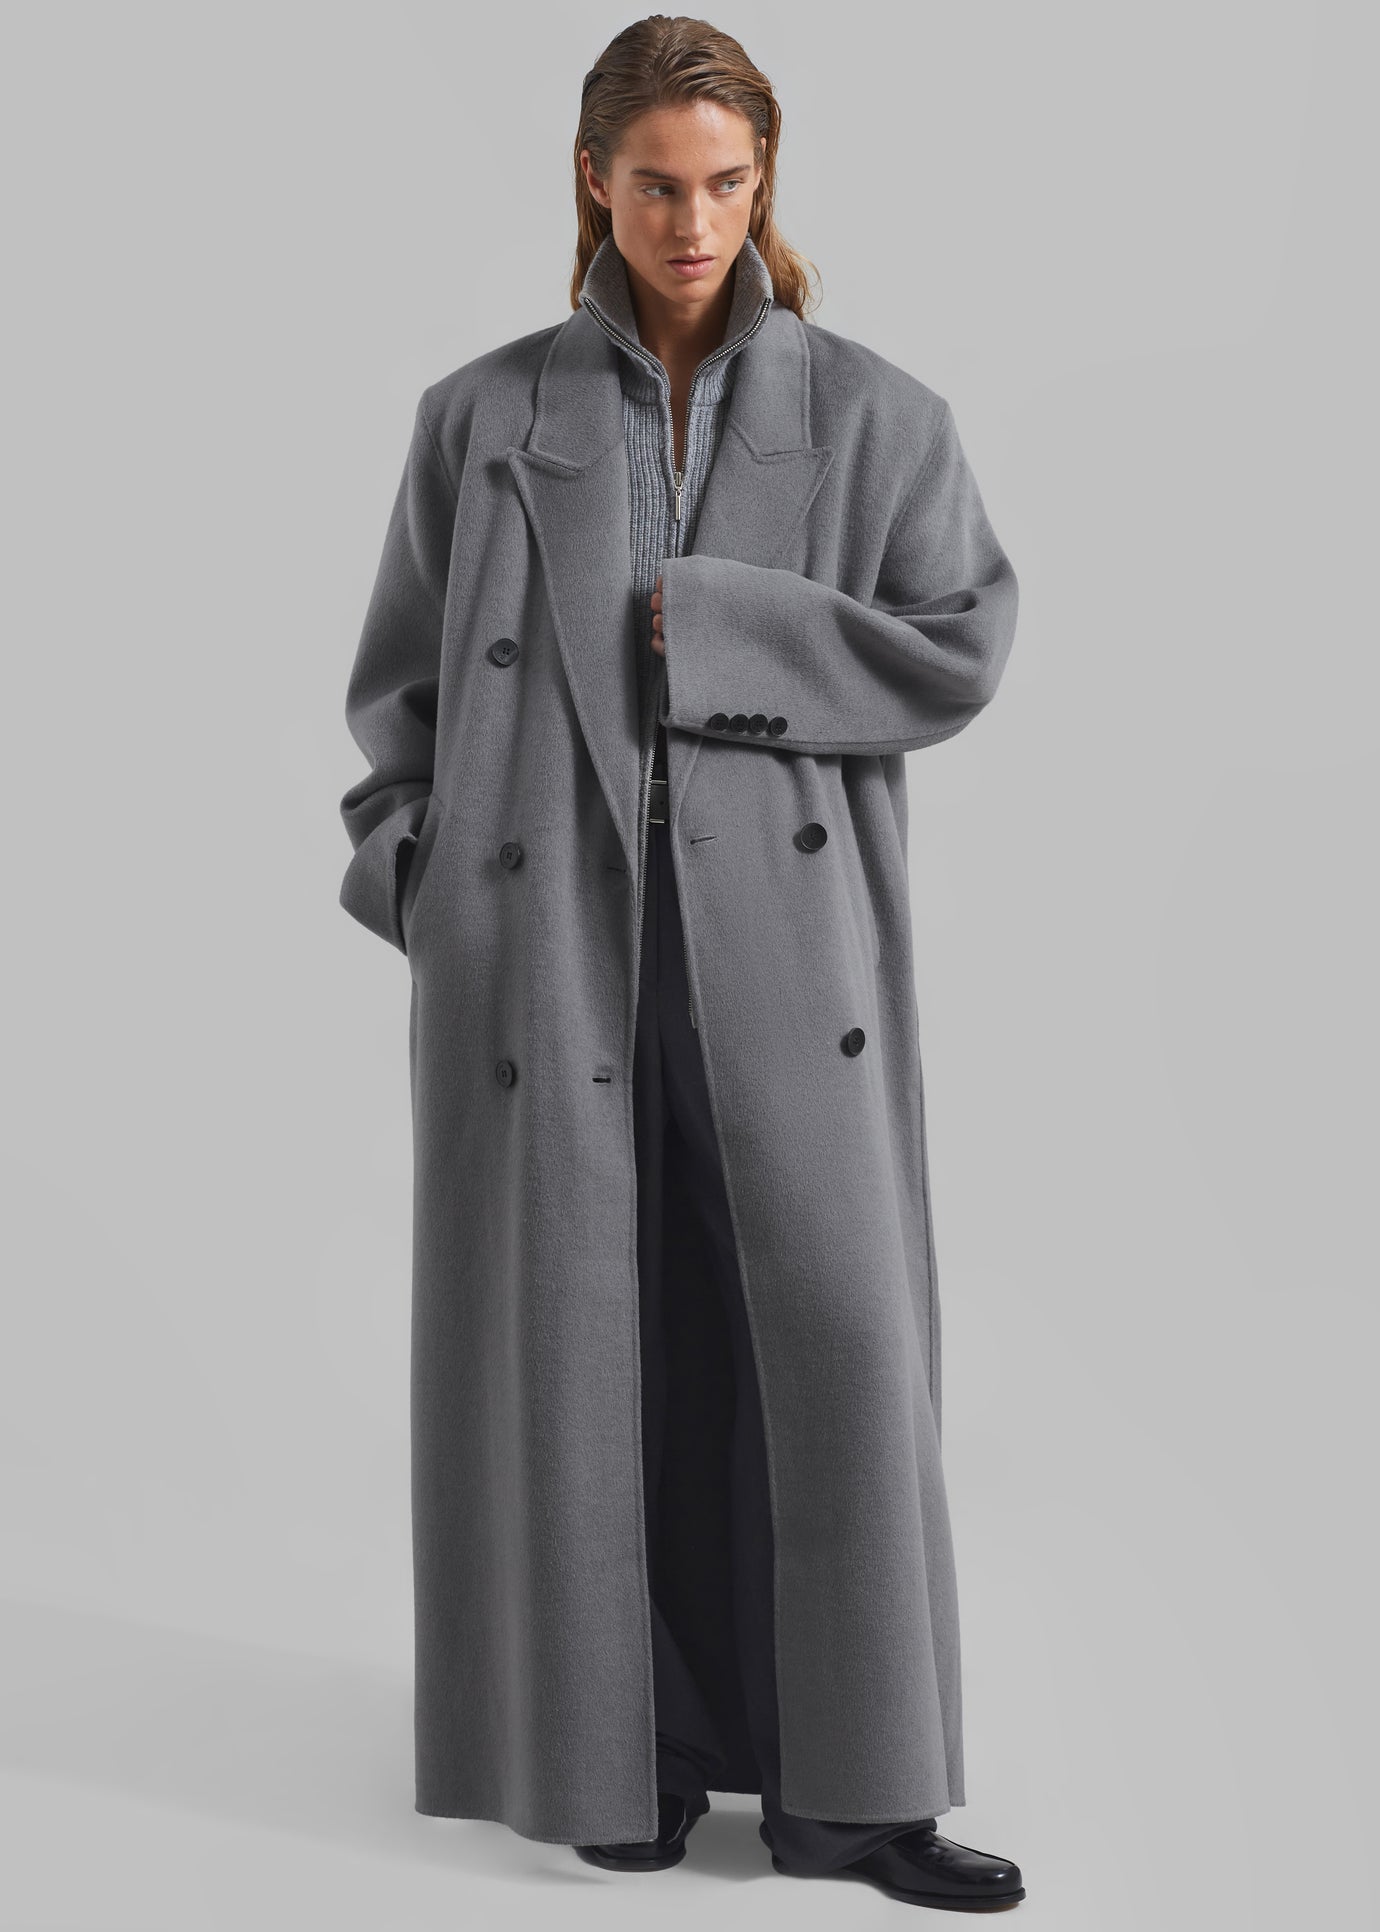 Women's Coats – The Frankie Shop